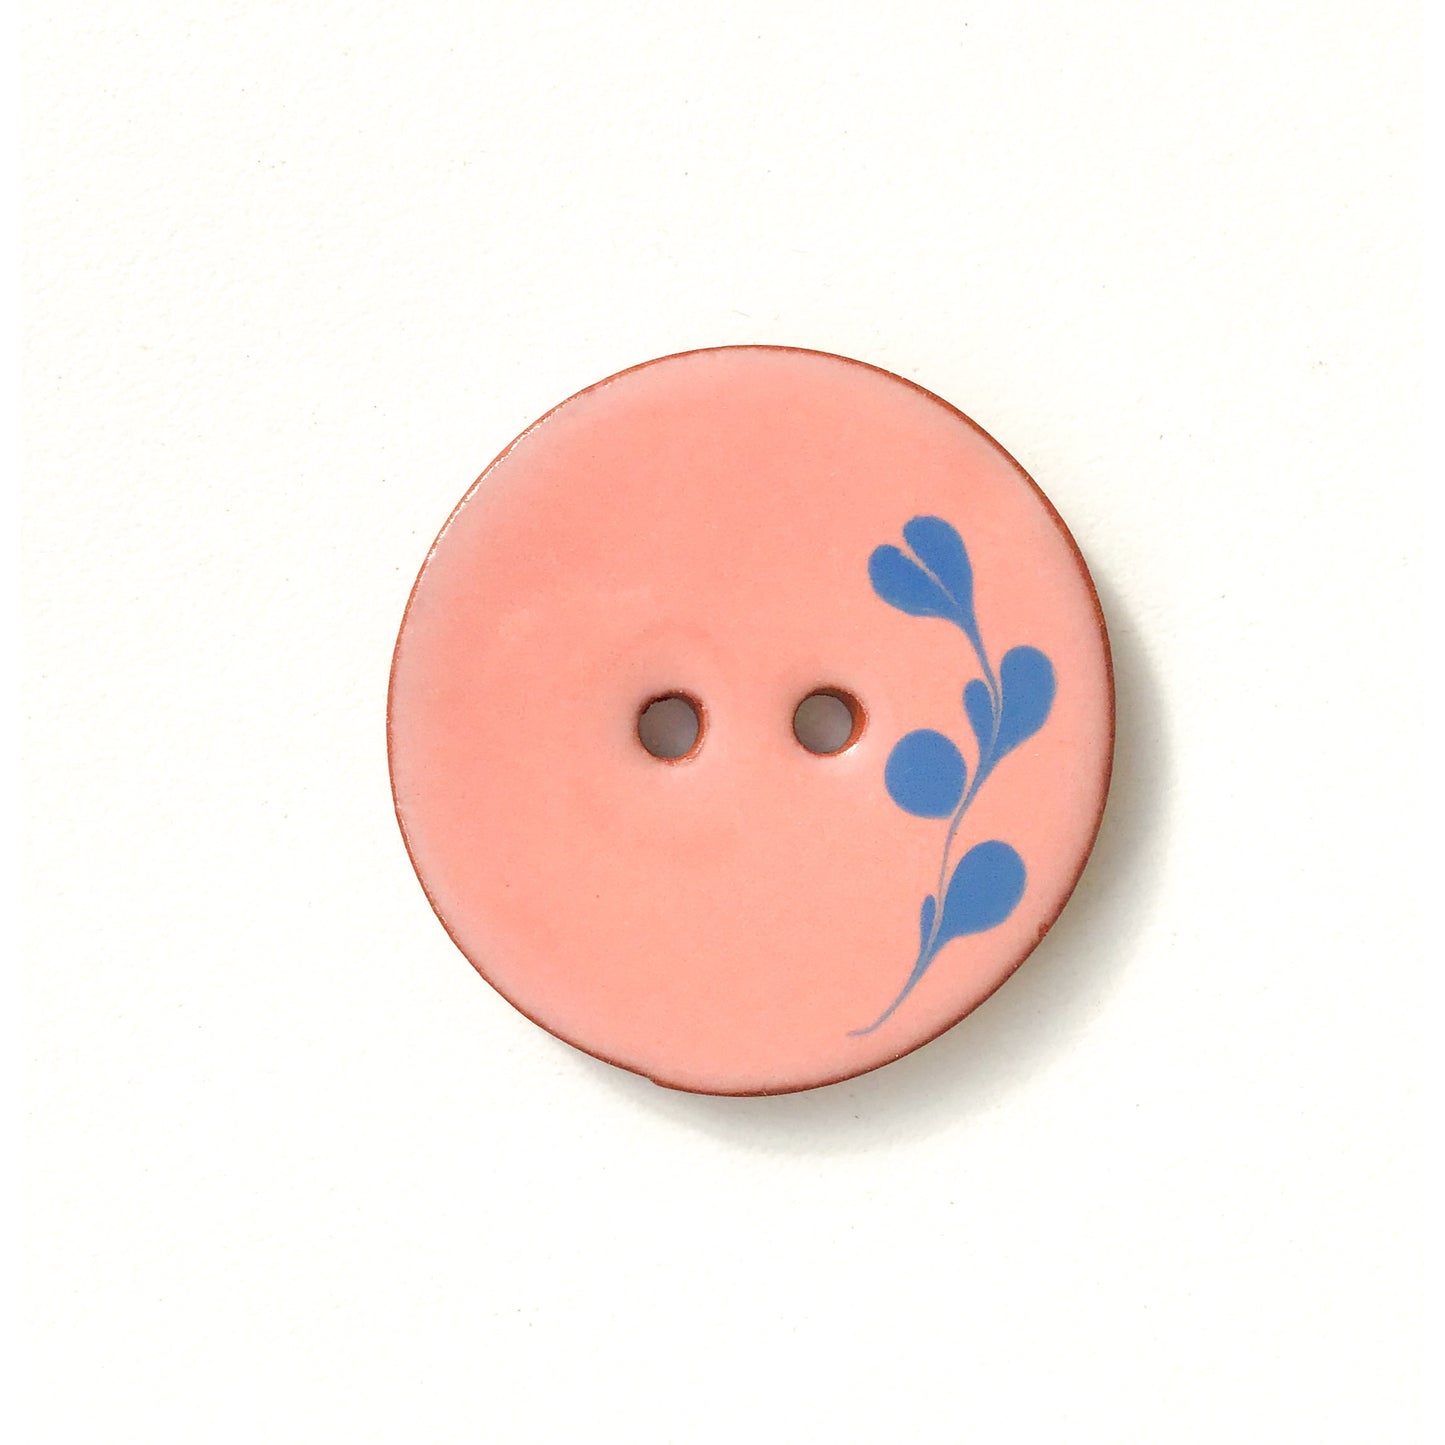 Coral Ceramic Button with Blue Detail - Decorative Ceramic Button - 1 3/8" (ws-55)